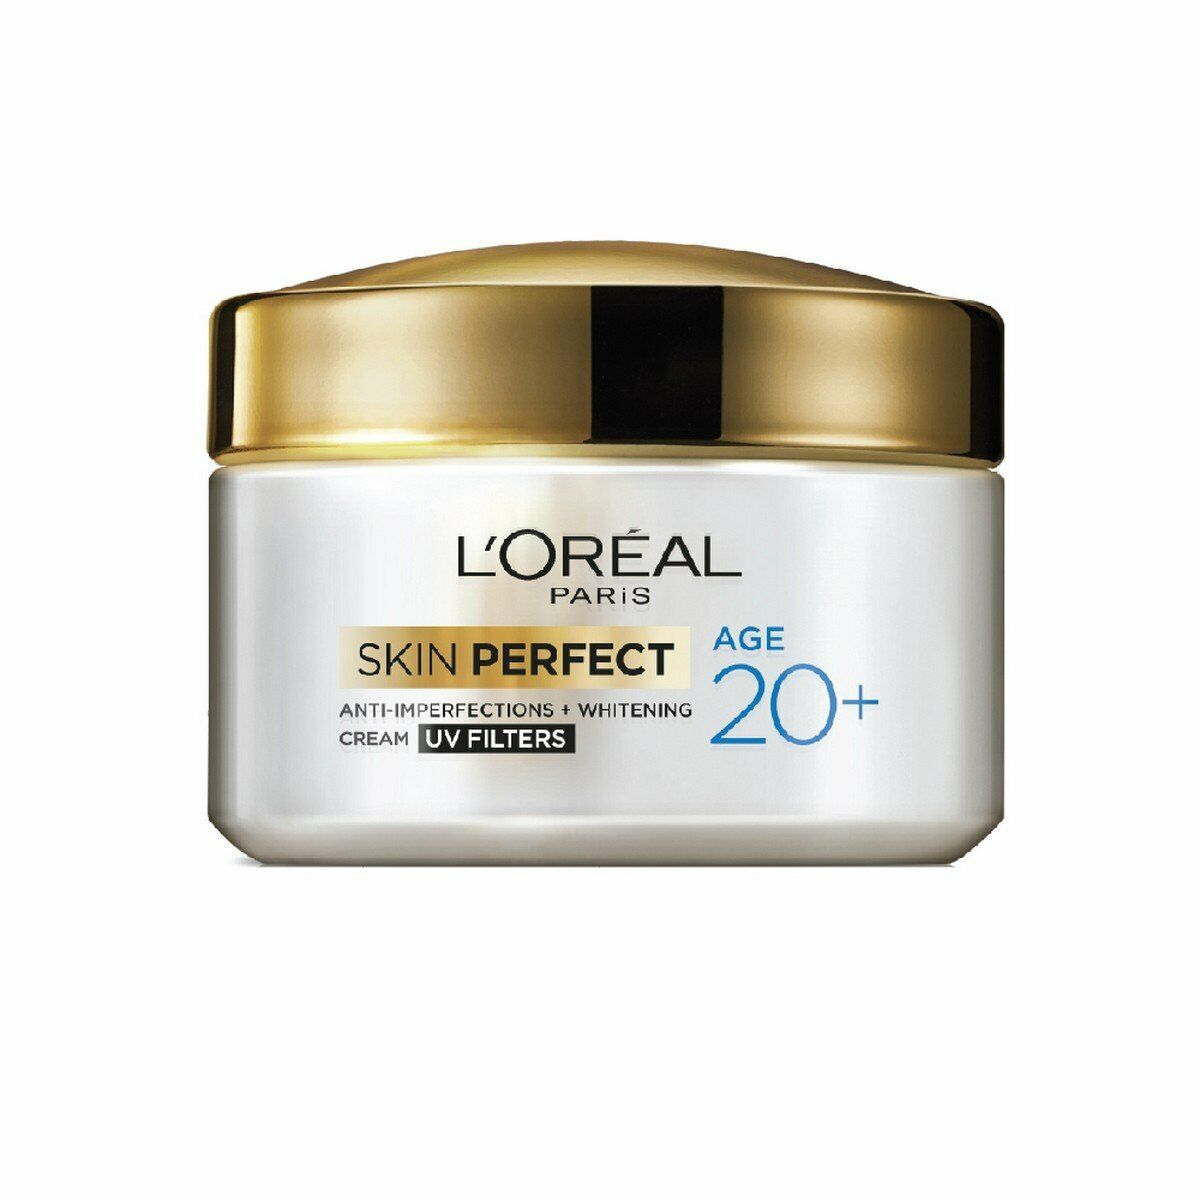 L'Oreal Paris Age 20+ Skin Perfect Cream UV Filters